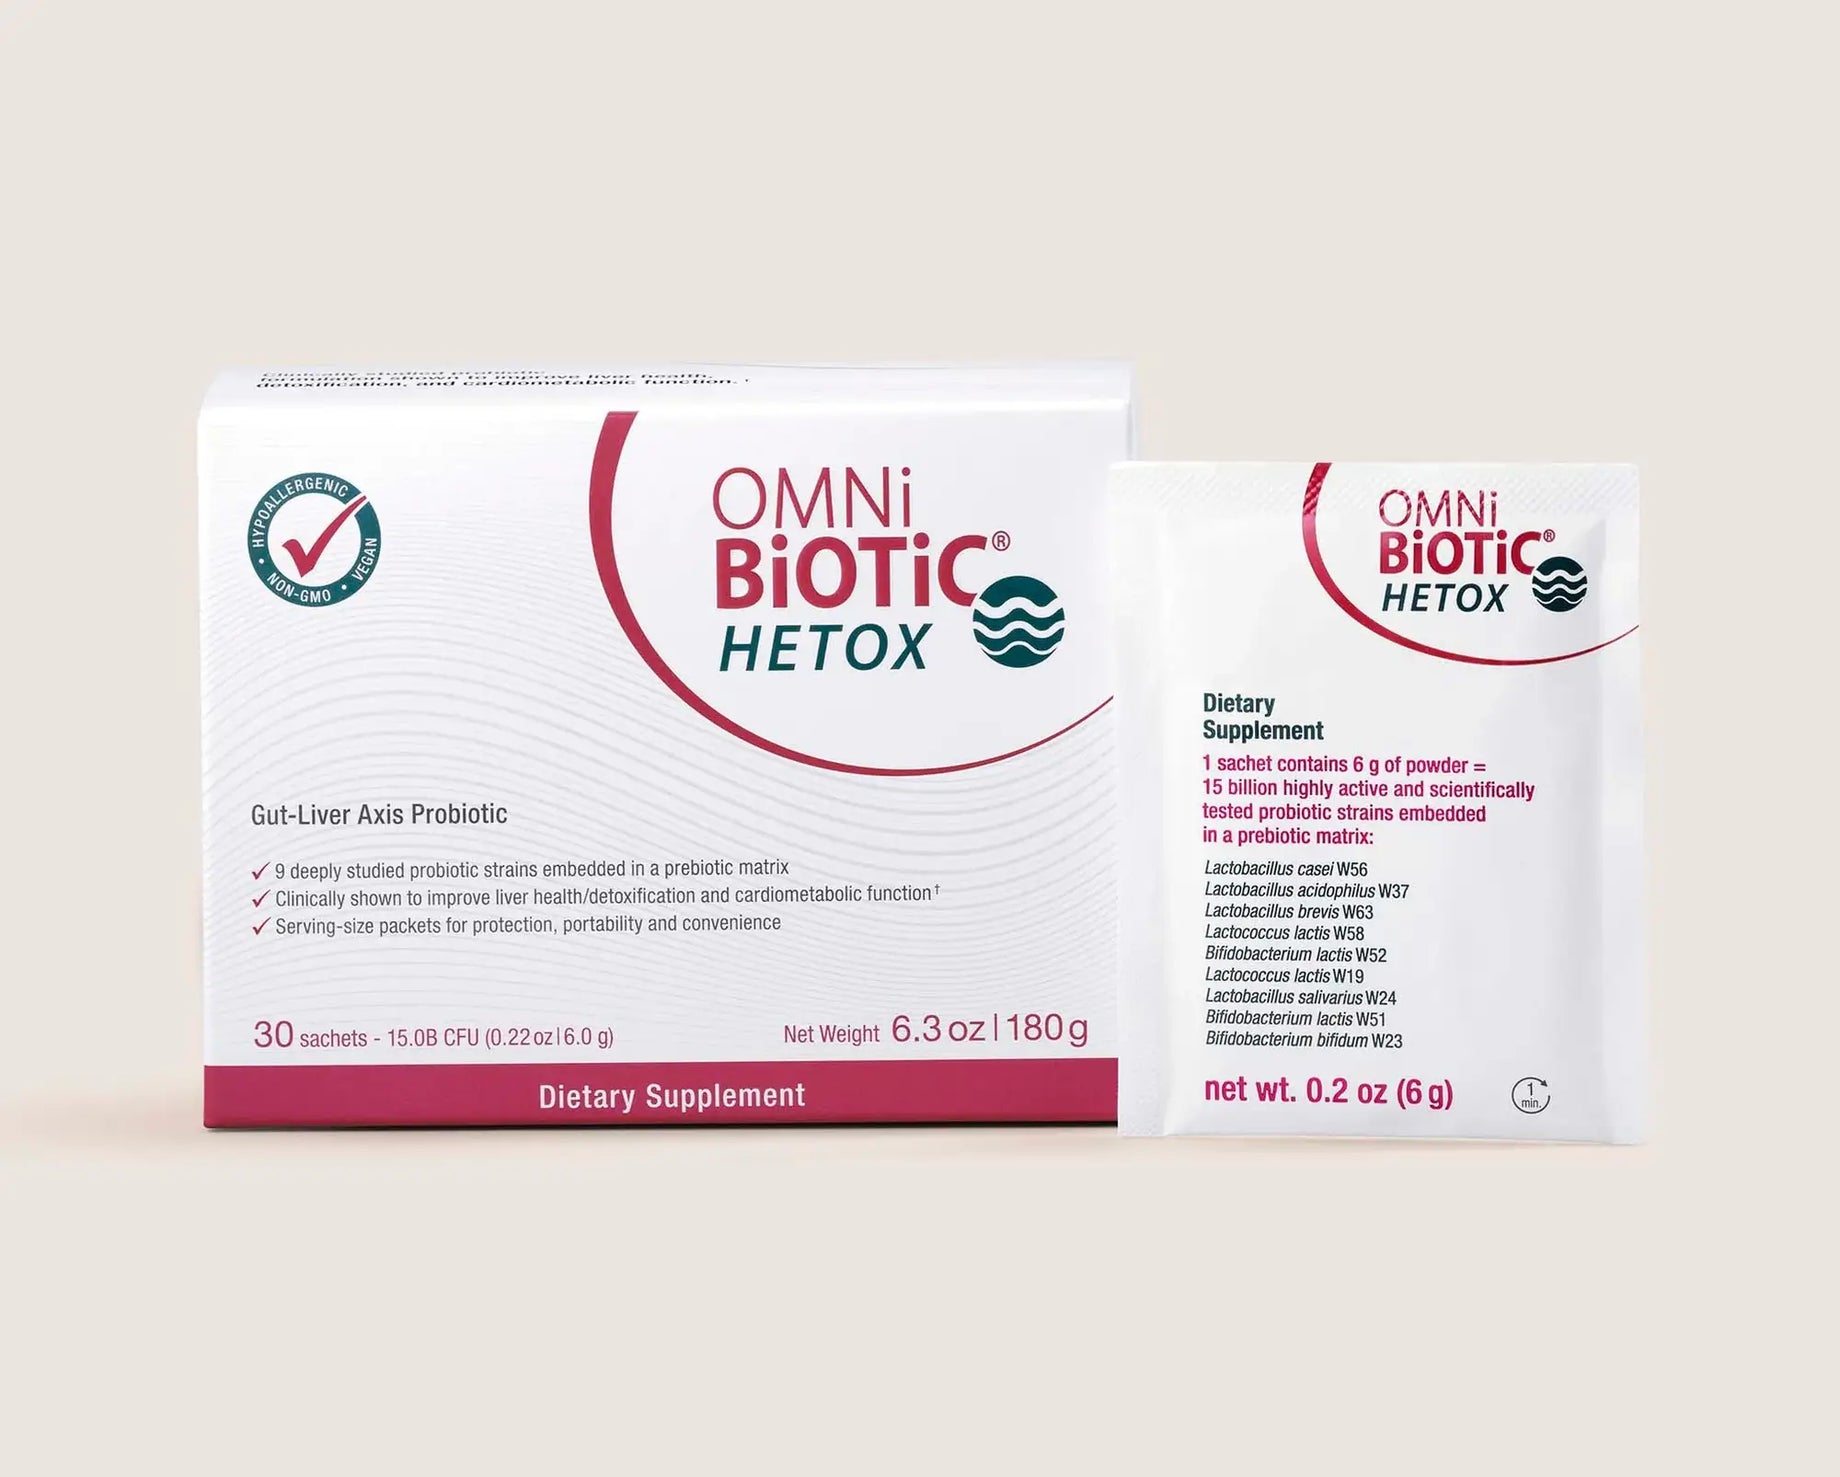 Introducing Omni-Biotic Hetox